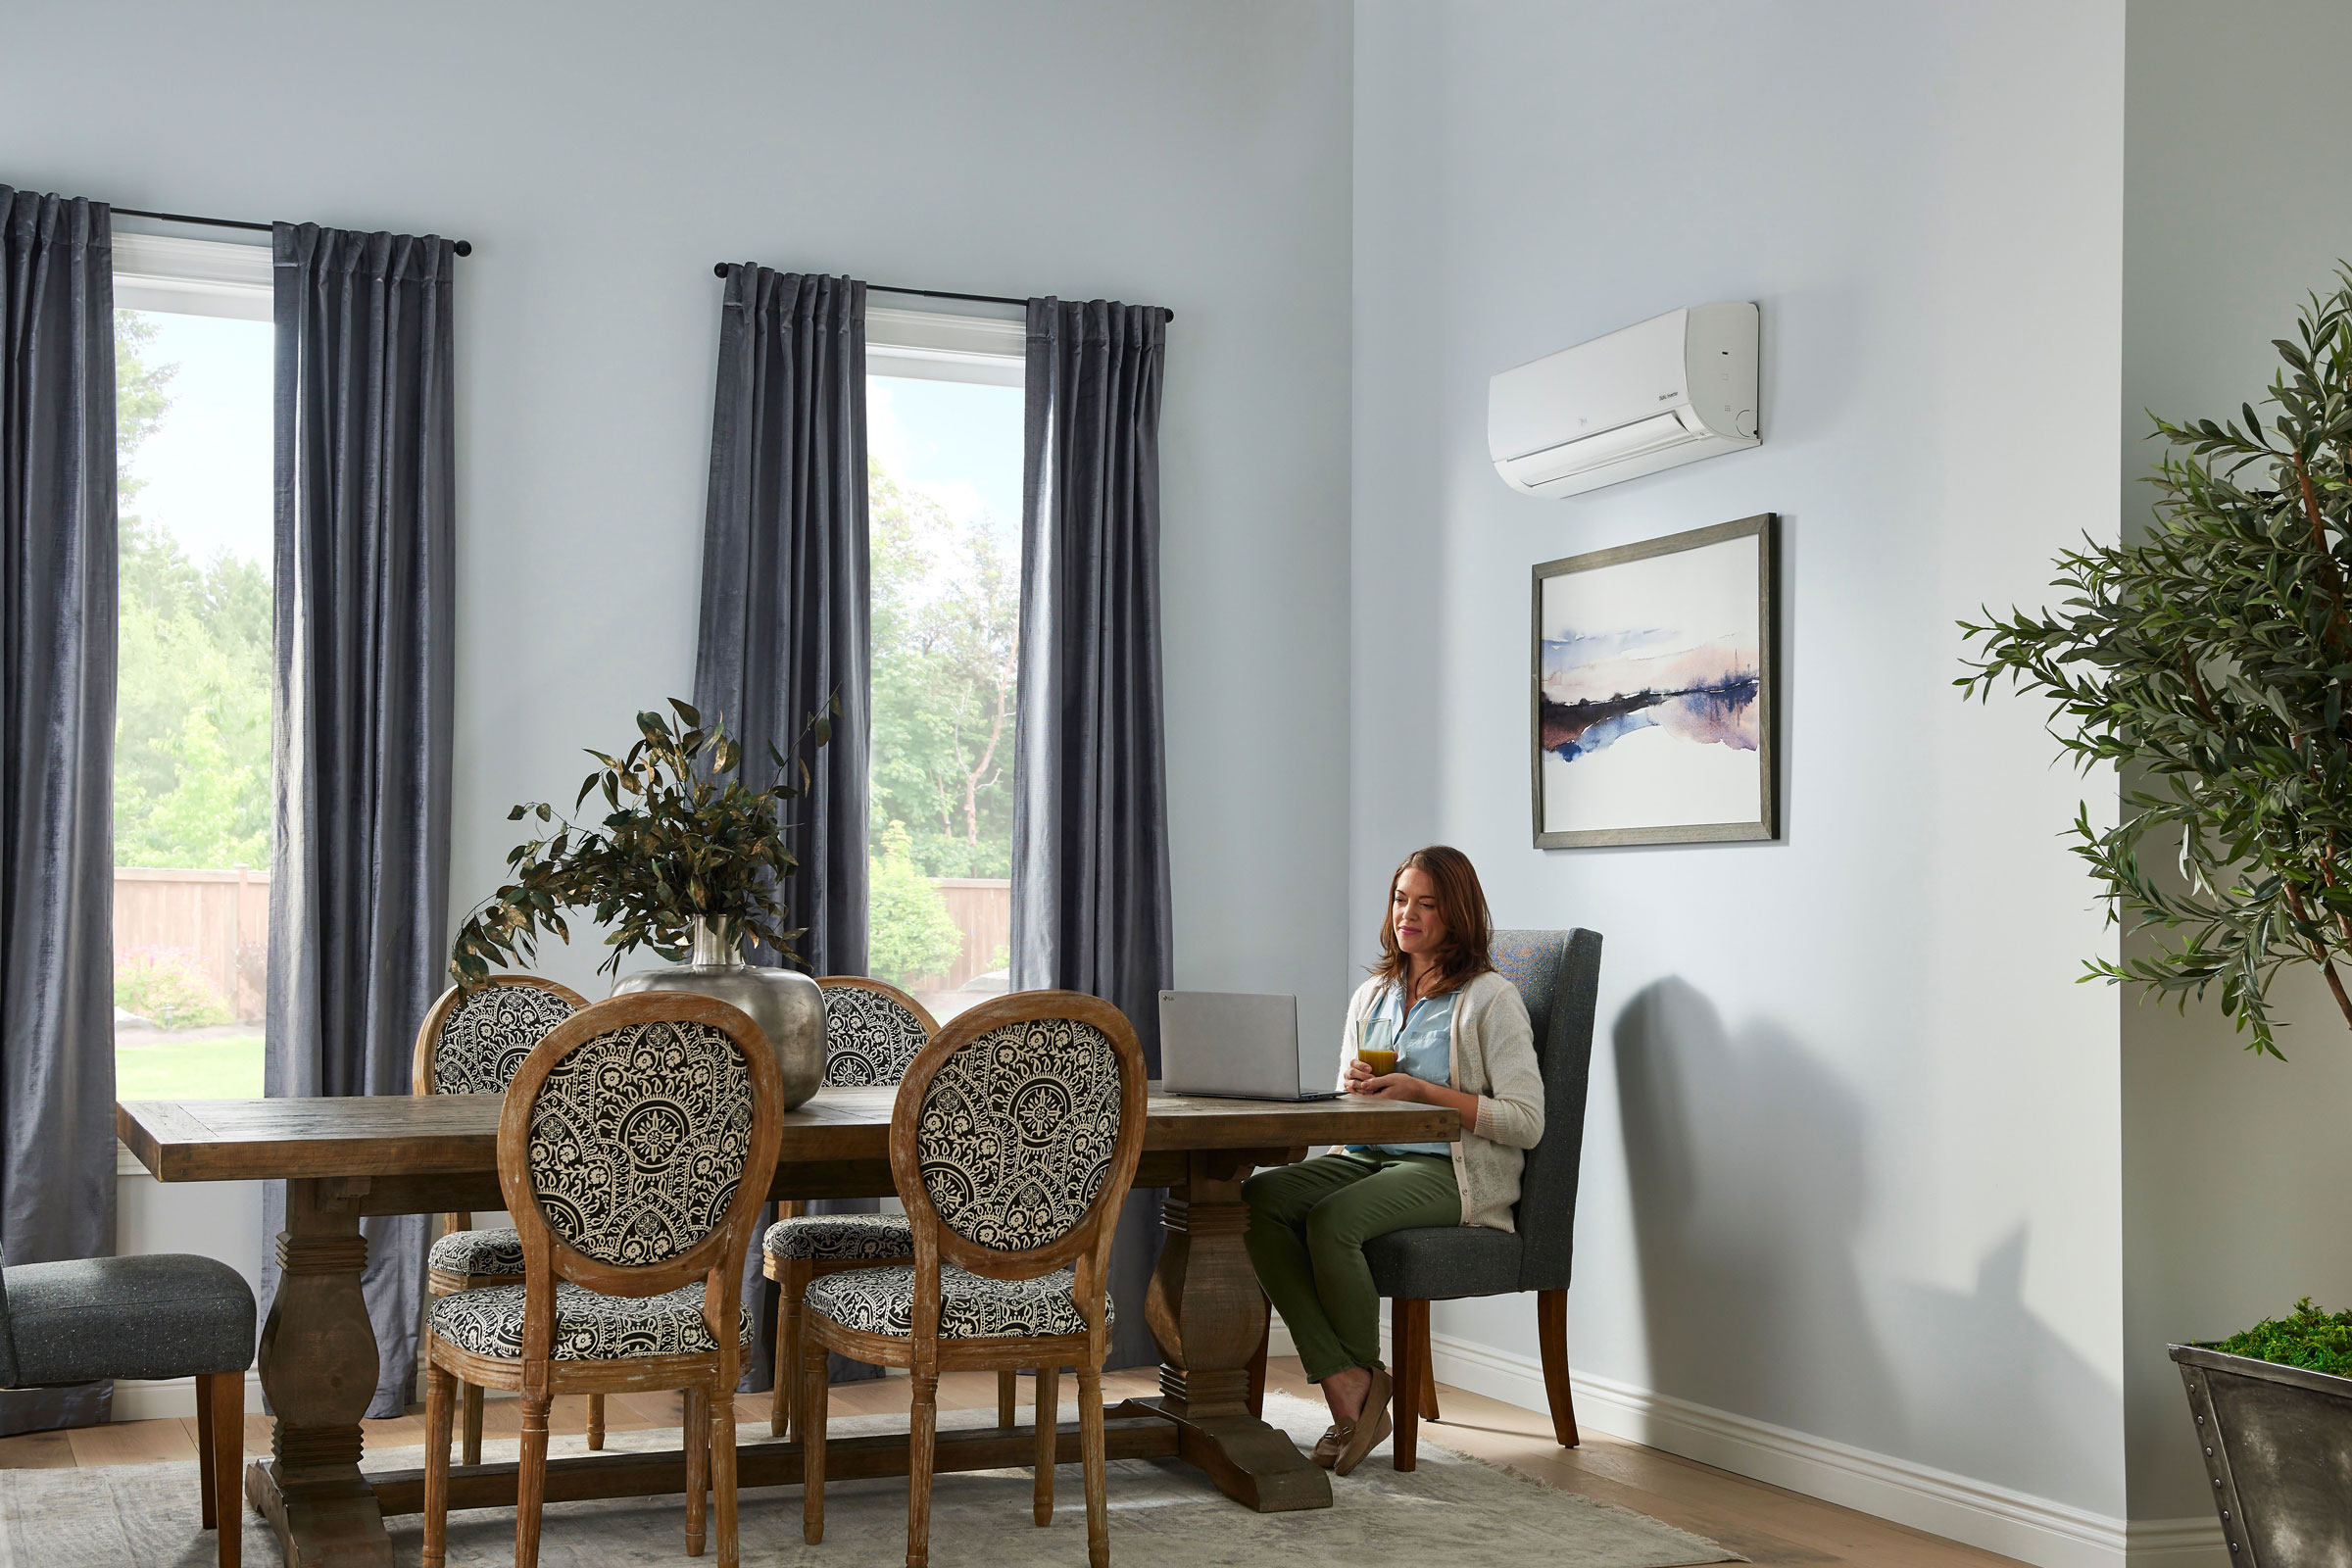 Heat Pumps Solve Modern Heating and Cooling Dilemmas